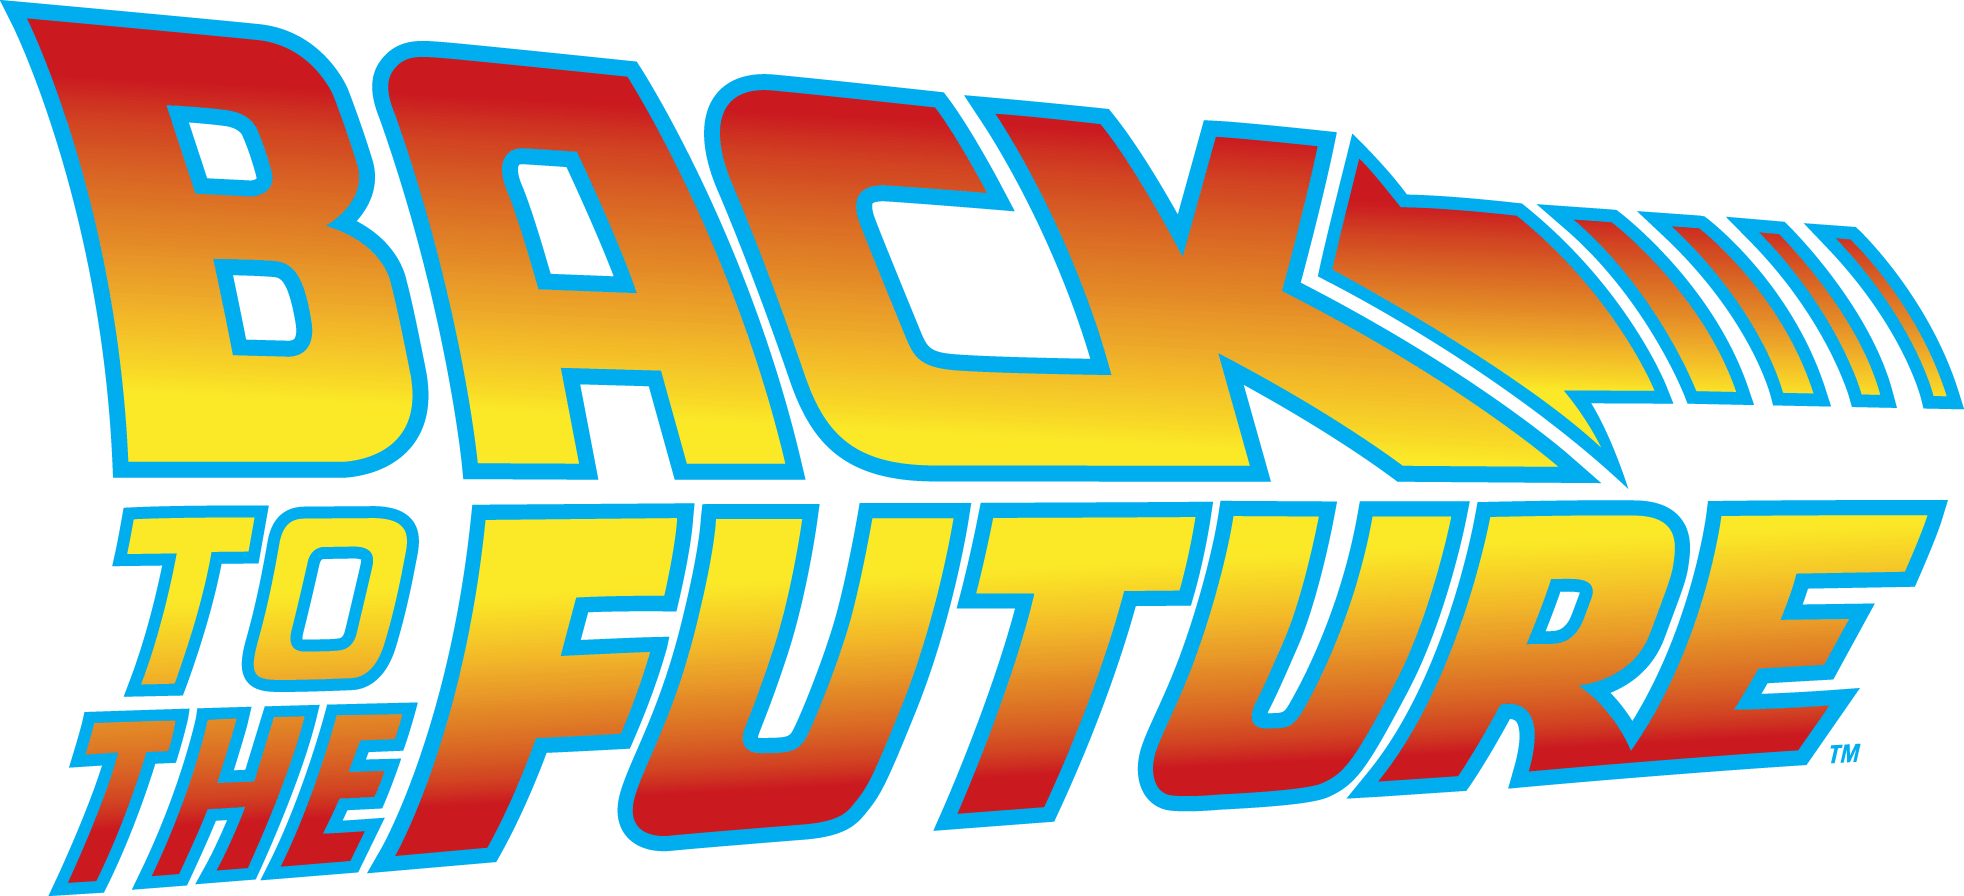 Future Logo - Back to the future logo.png